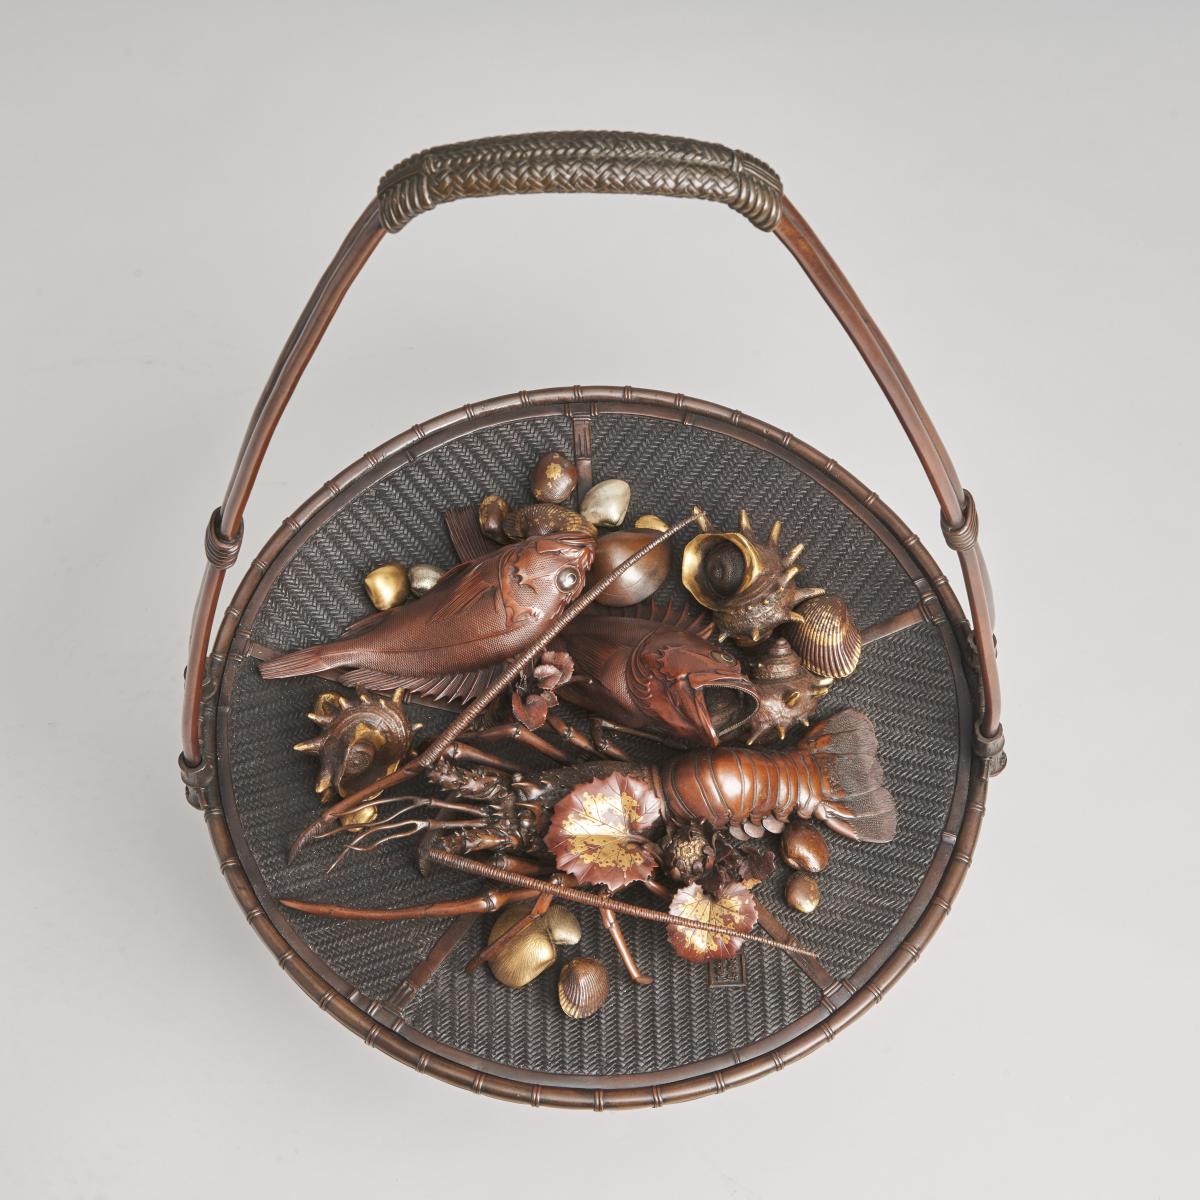 An elaborate Japanese, Meiji-era bronze and multi-metal basket of seafood Signed Joun